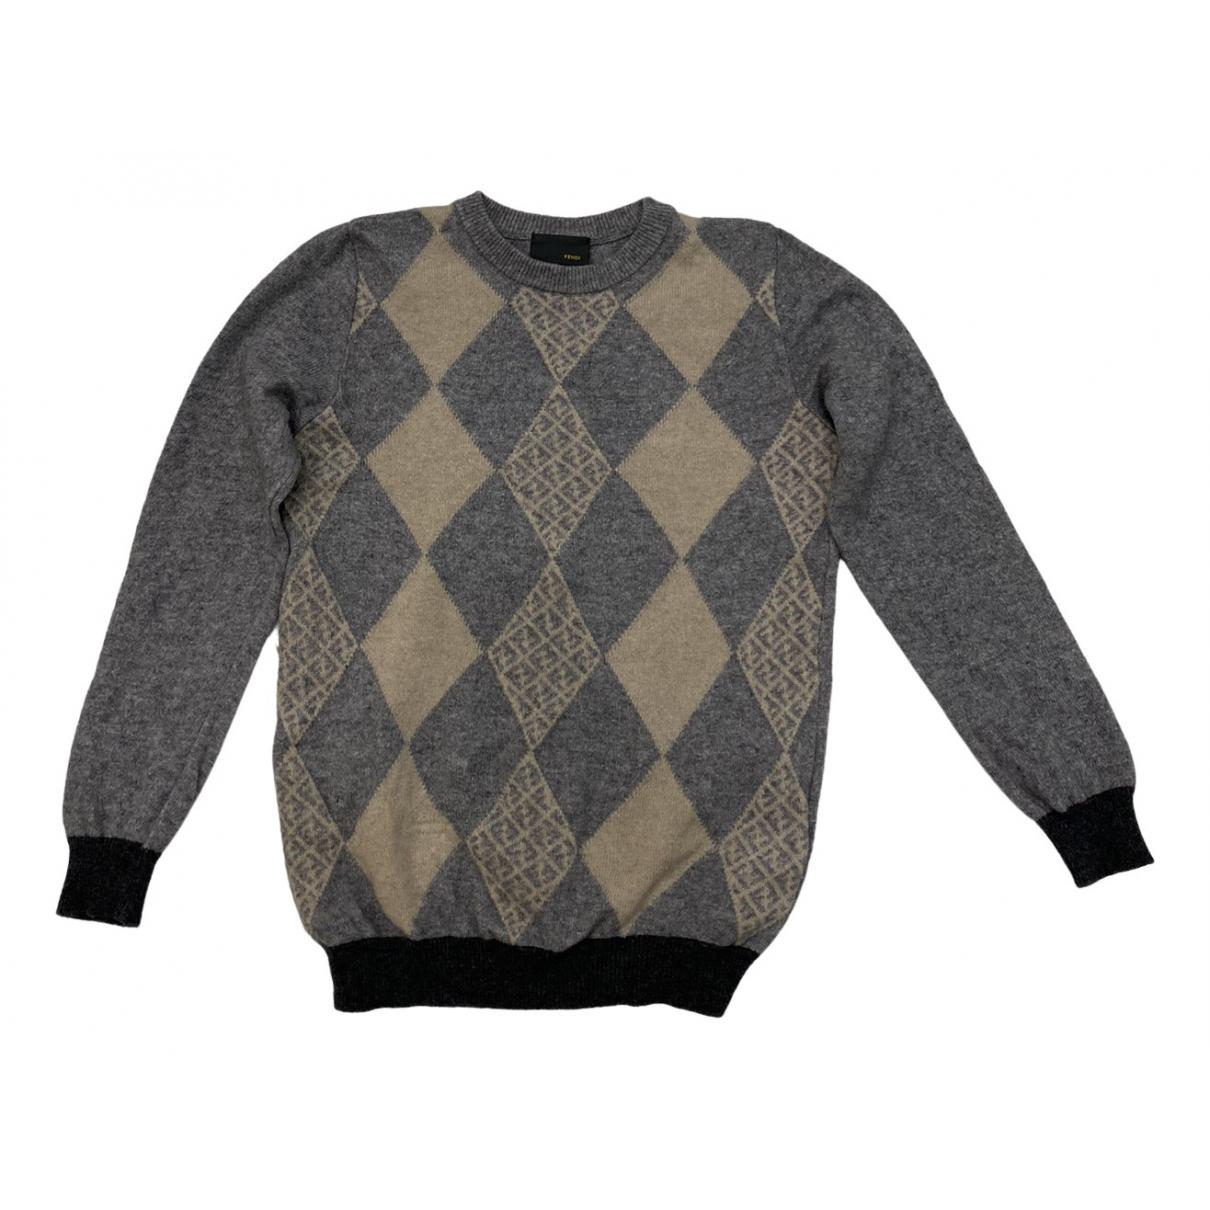 Wool sweater Fendi